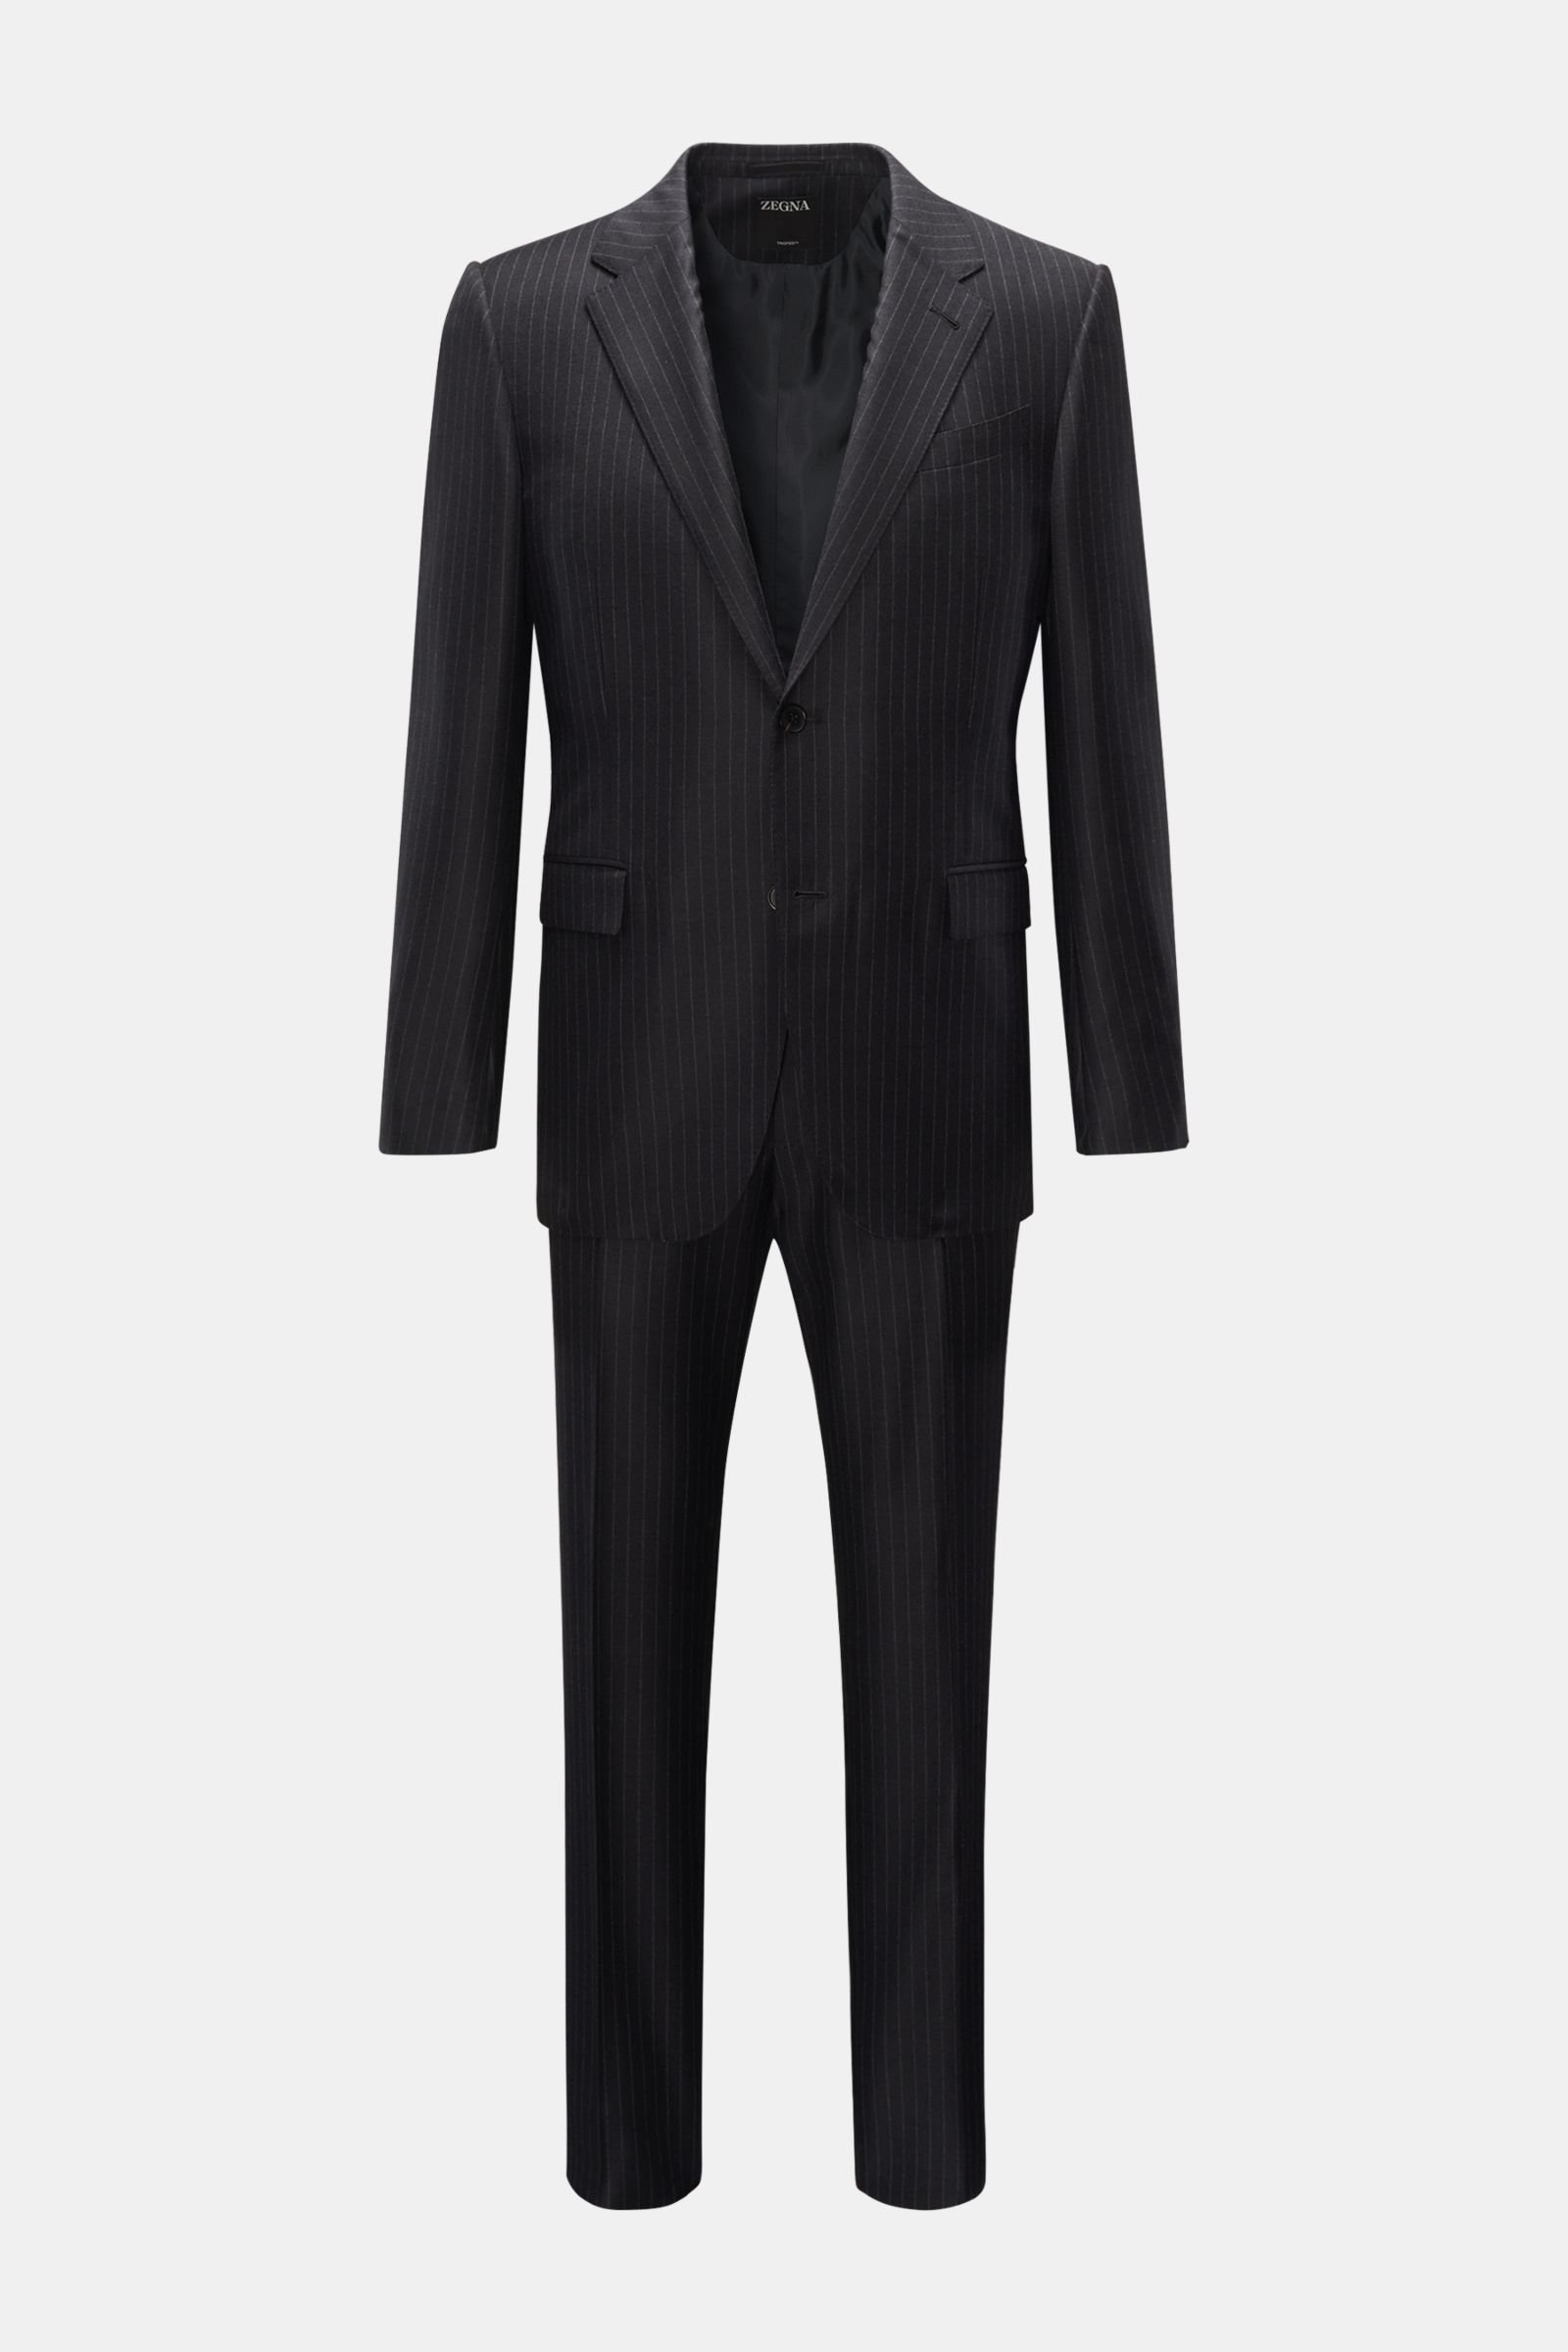 Zegna - Men - Suit 'Sartorial' Anthracite/Grey Striped